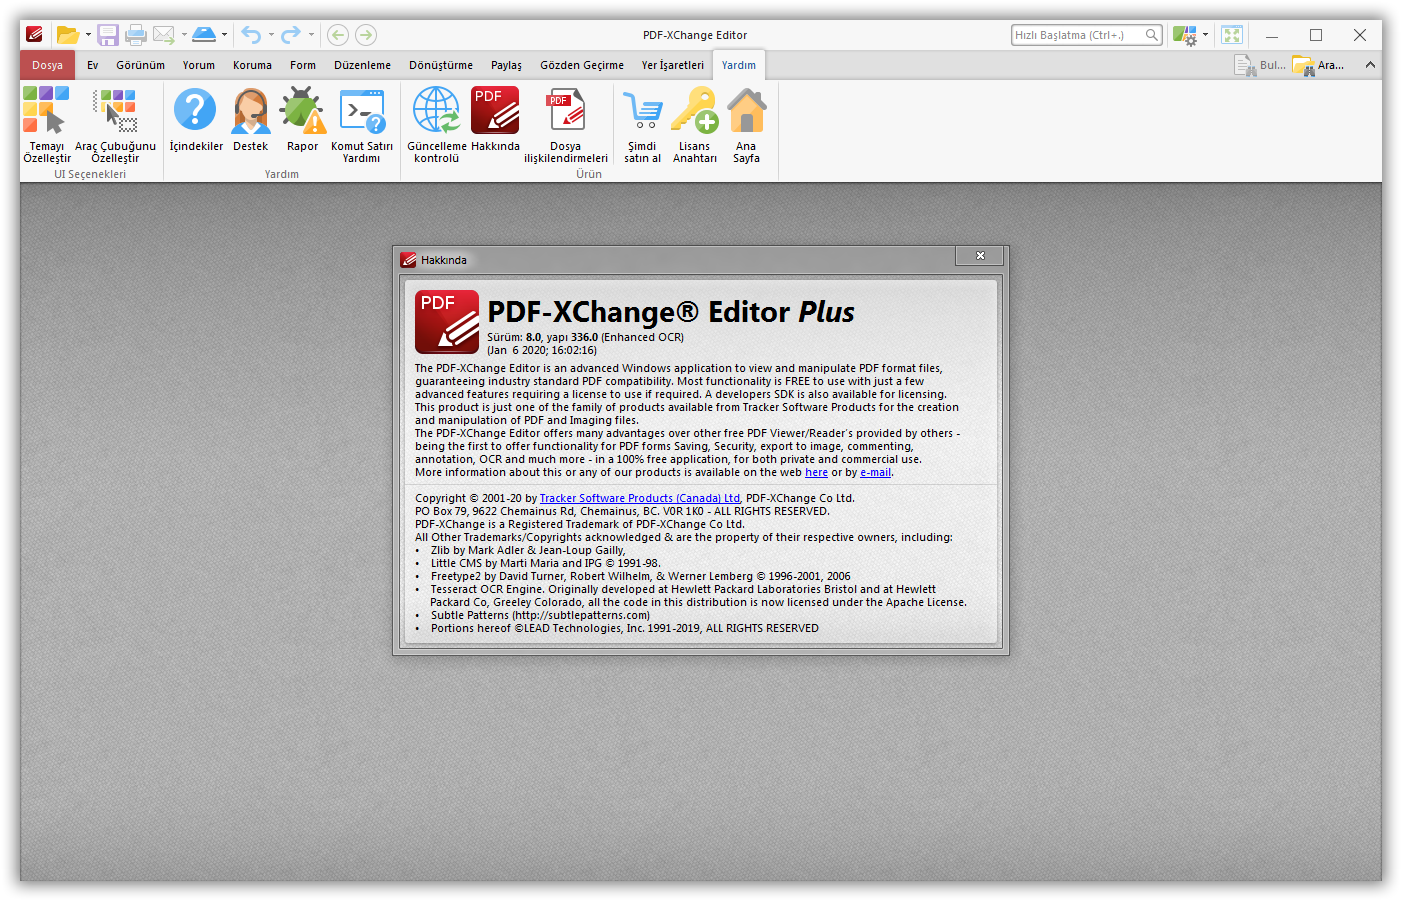 PDF-XChange Editor Plus/Pro 10.1.2.382.0 download